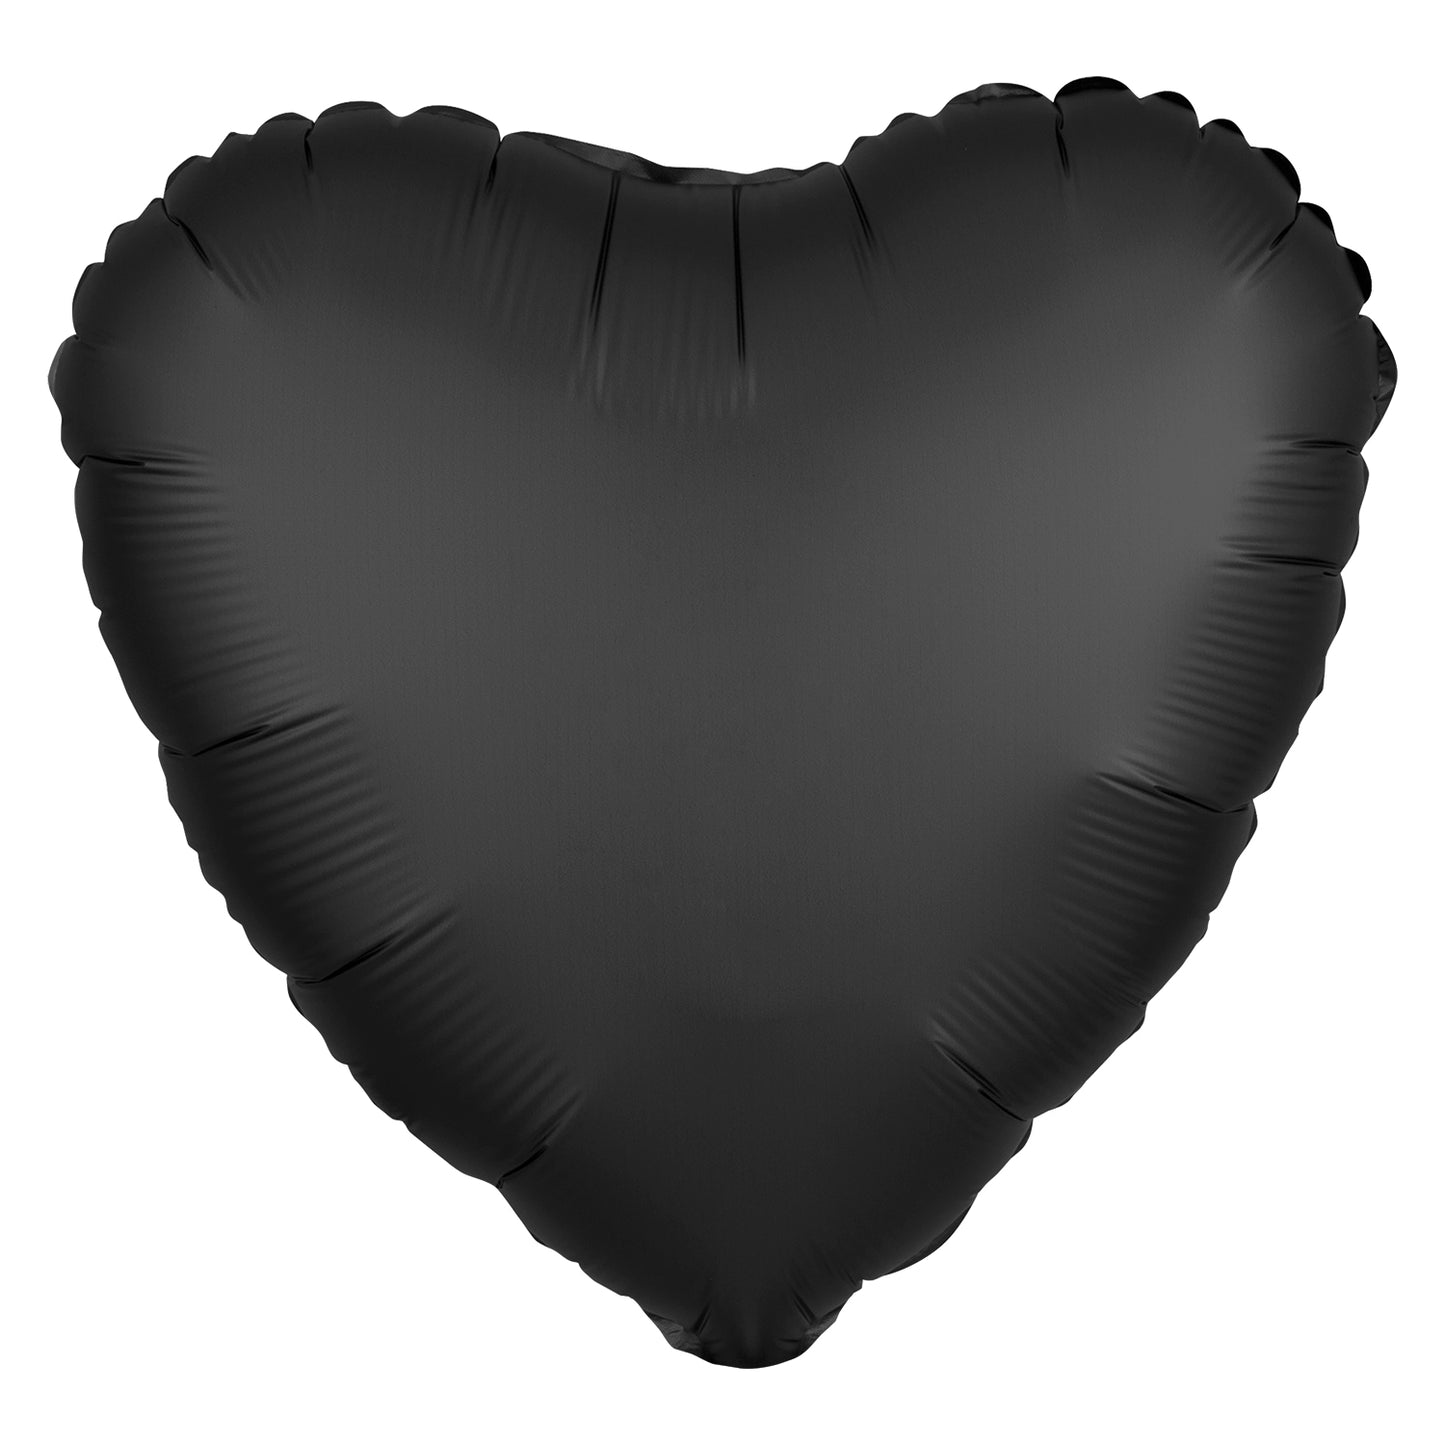 Satin Luxe Onyx Heart Standard HX UnPackaged Foil Balloons S15 - 1 PC